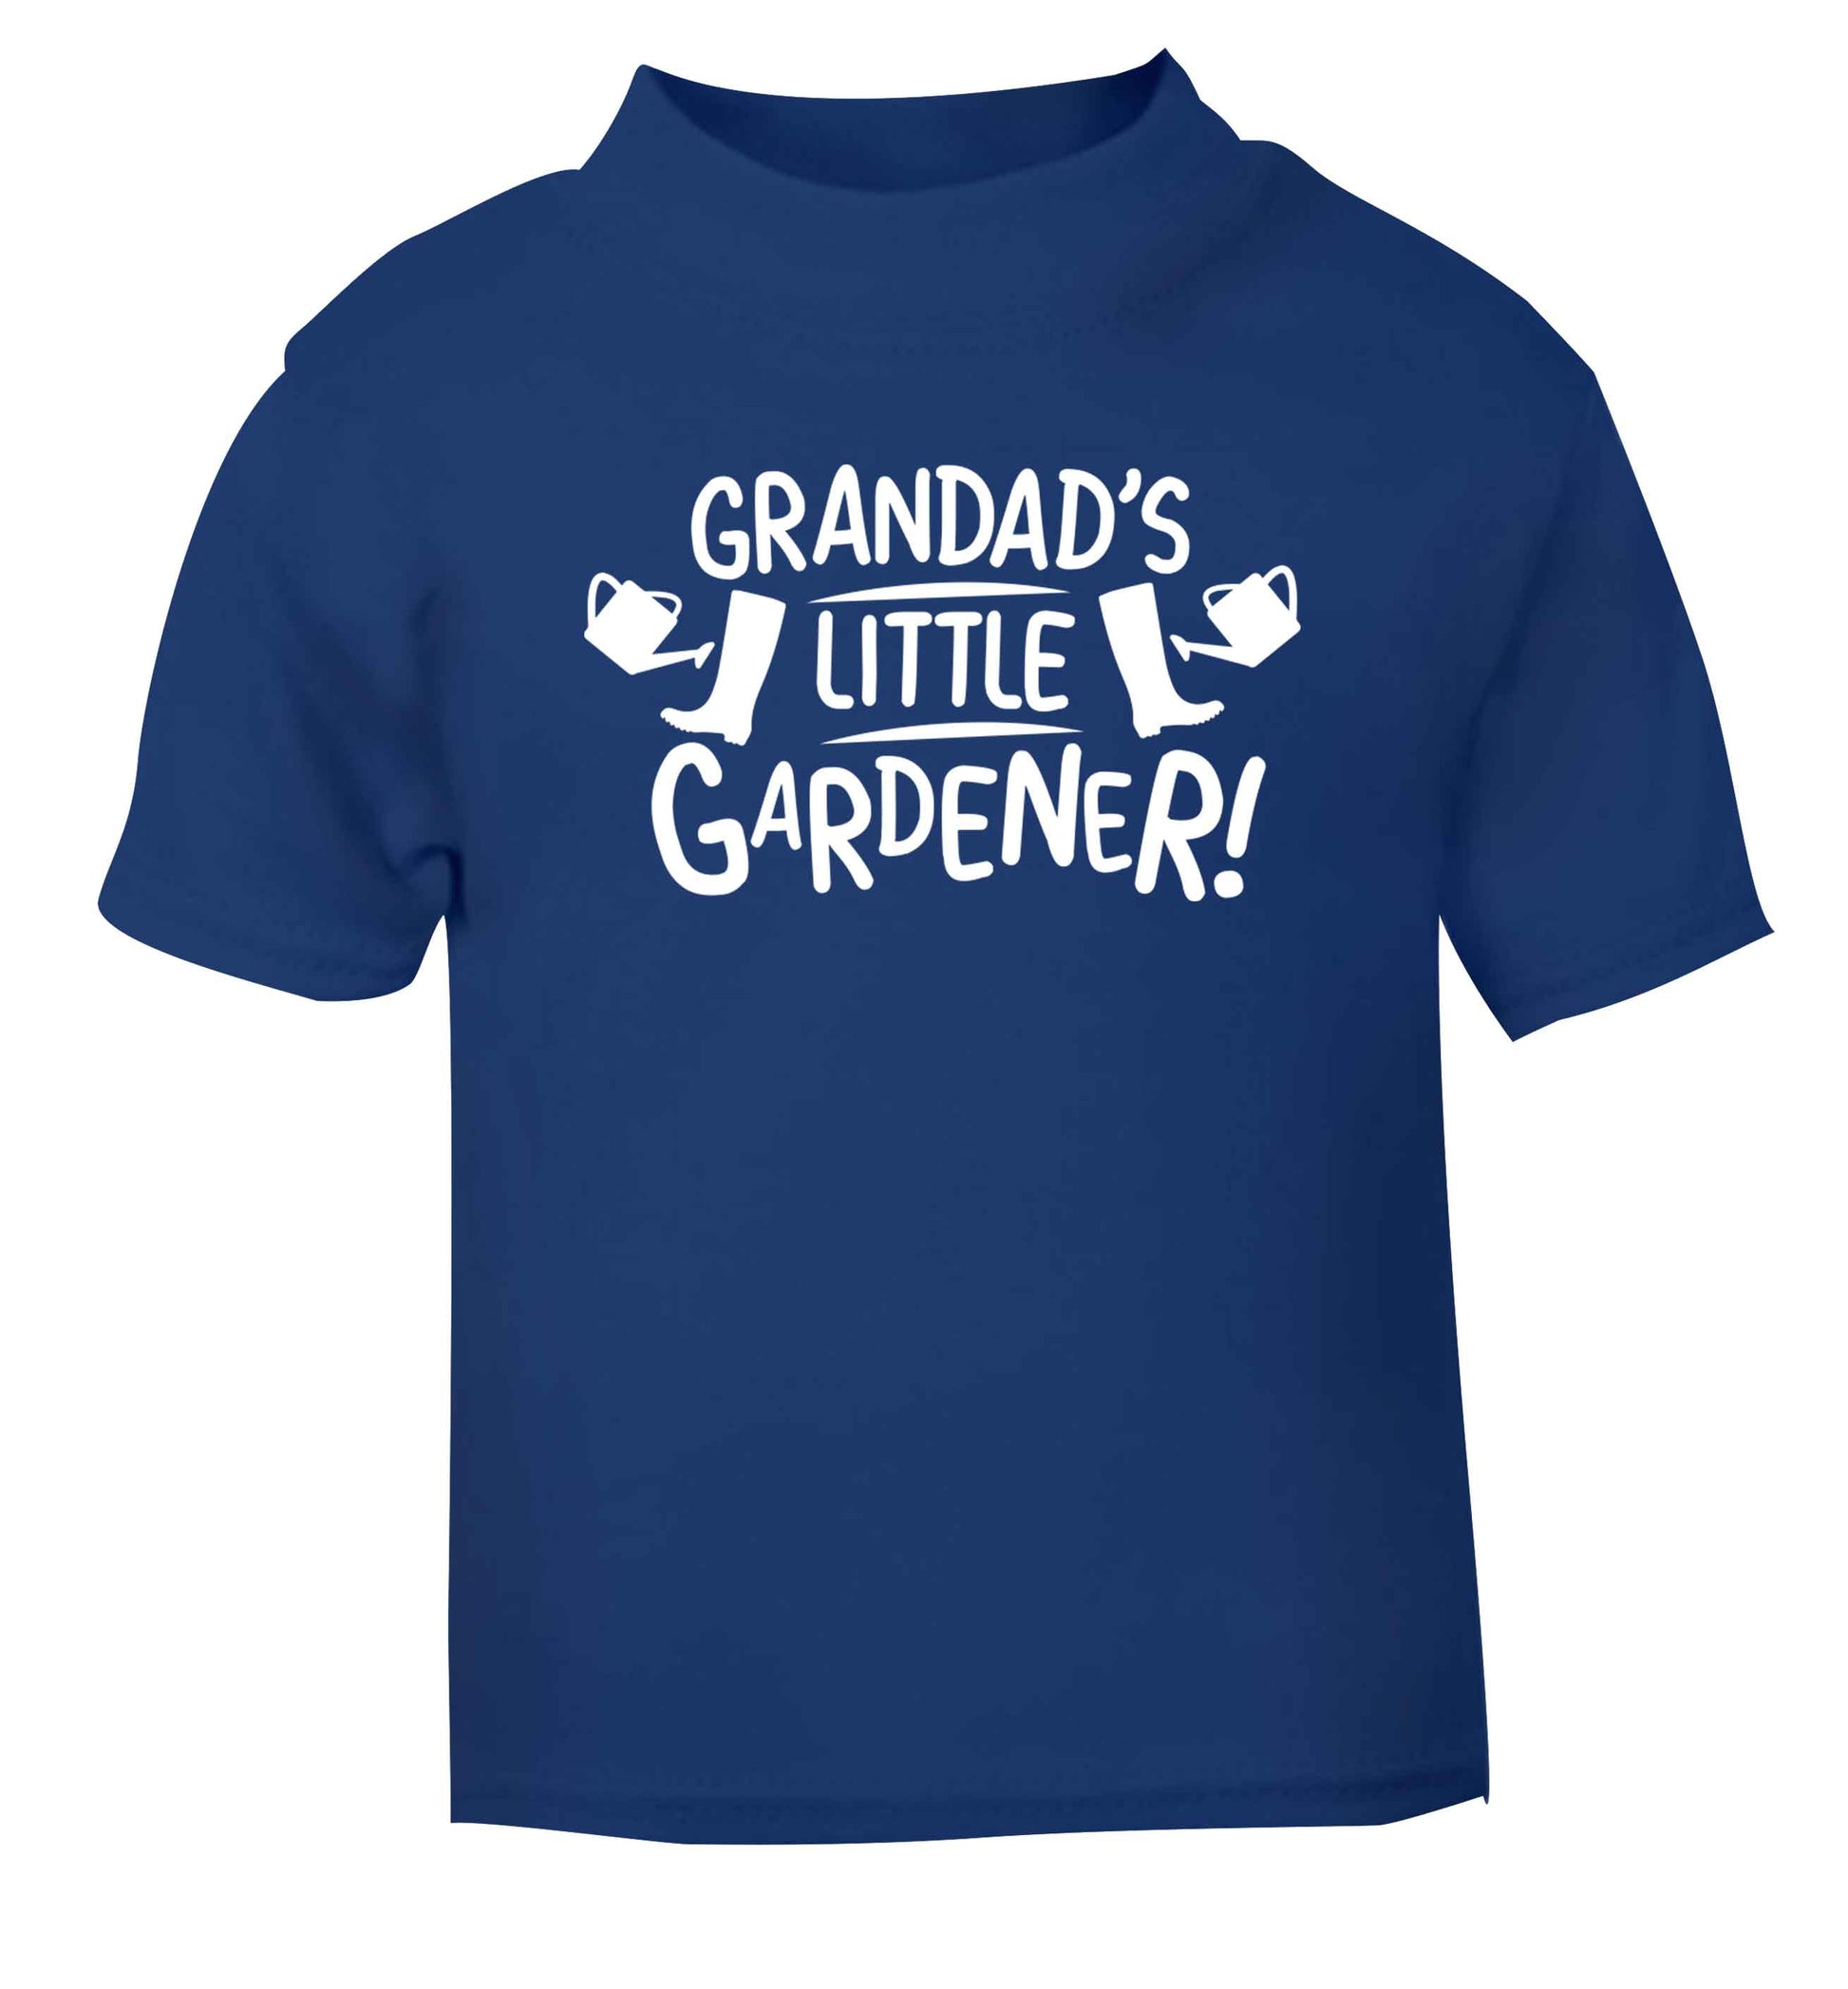 Grandad's little gardener blue Baby Toddler Tshirt 2 Years